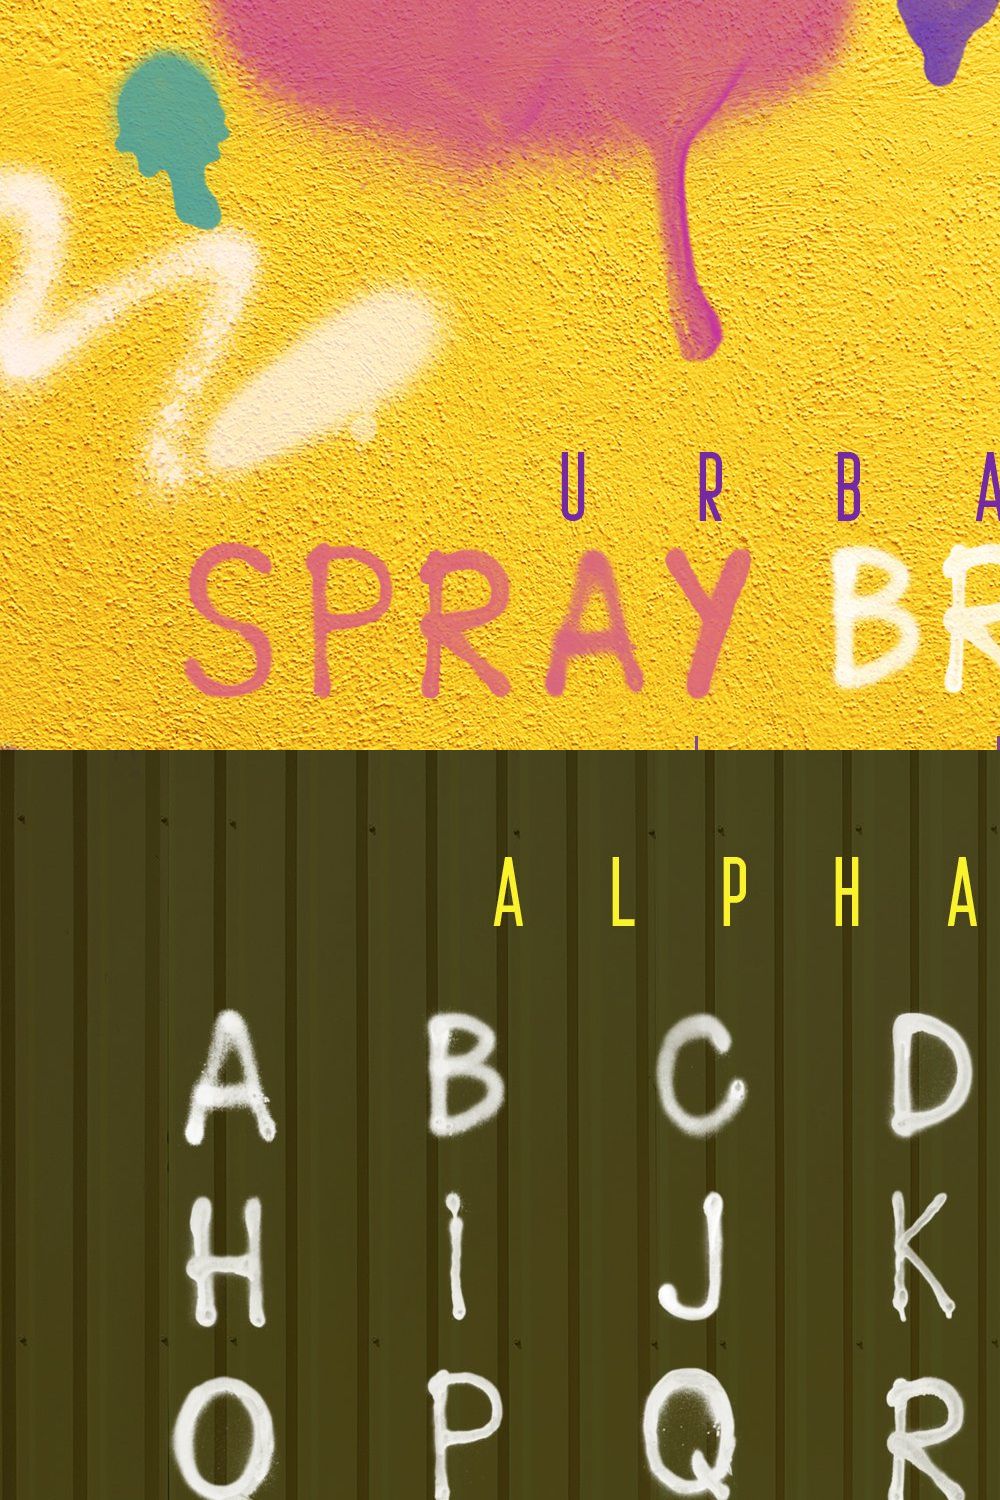 Procreate&Ph Urban Spray Brushes pinterest preview image.